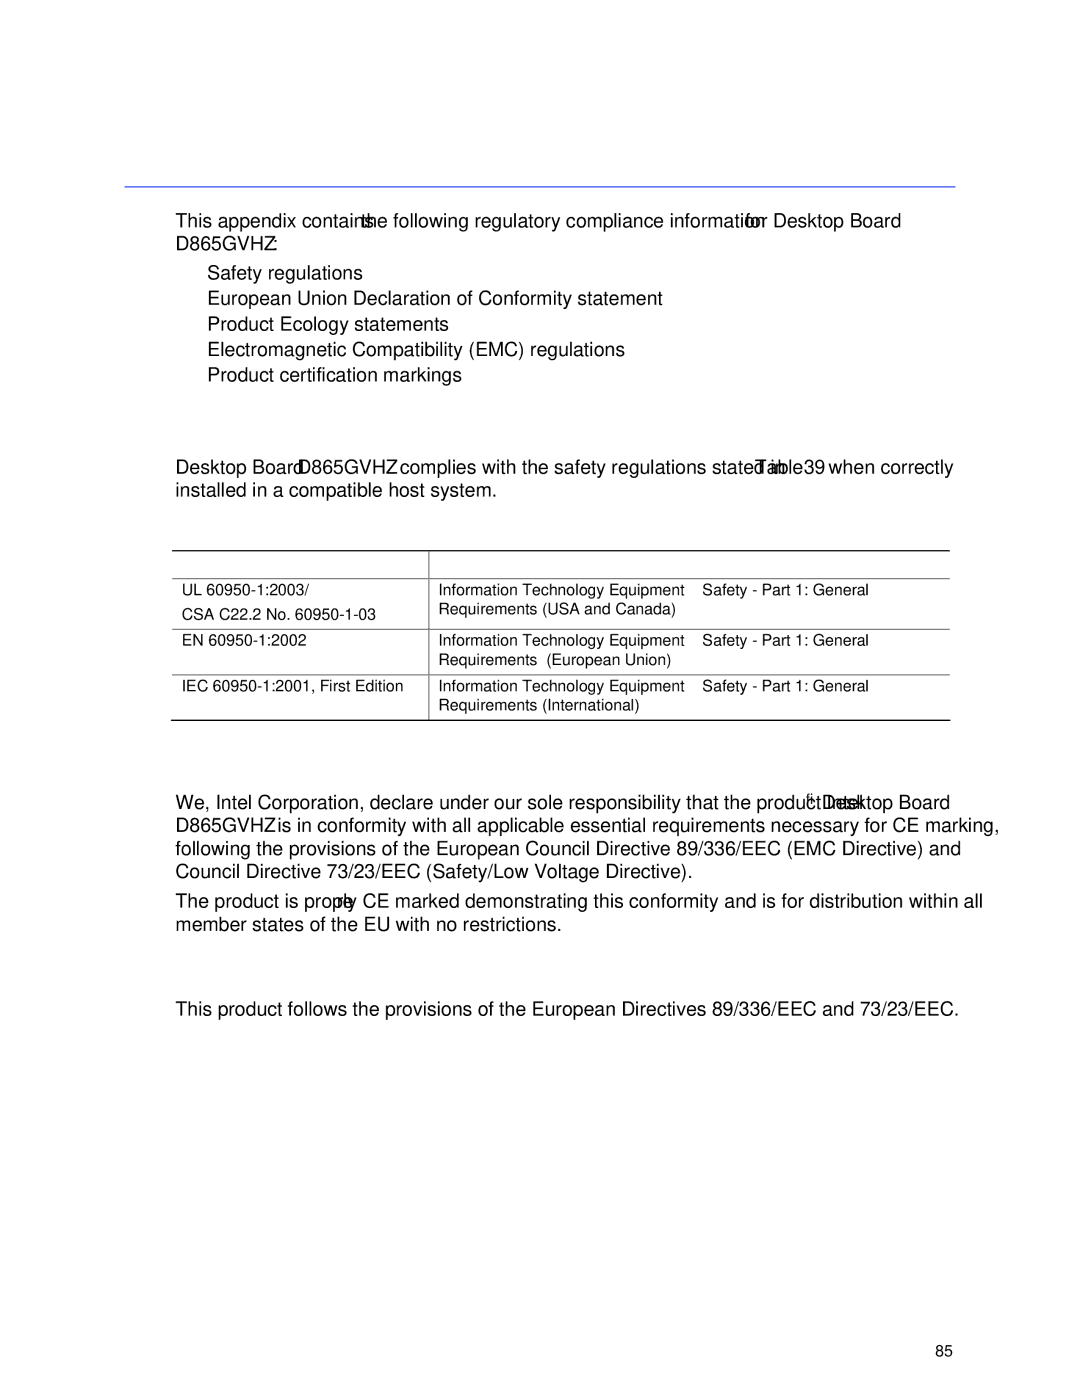 Intel D865GVHZ manual Regulatory Compliance, Safety Regulations, European Union Declaration of Conformity Statement 